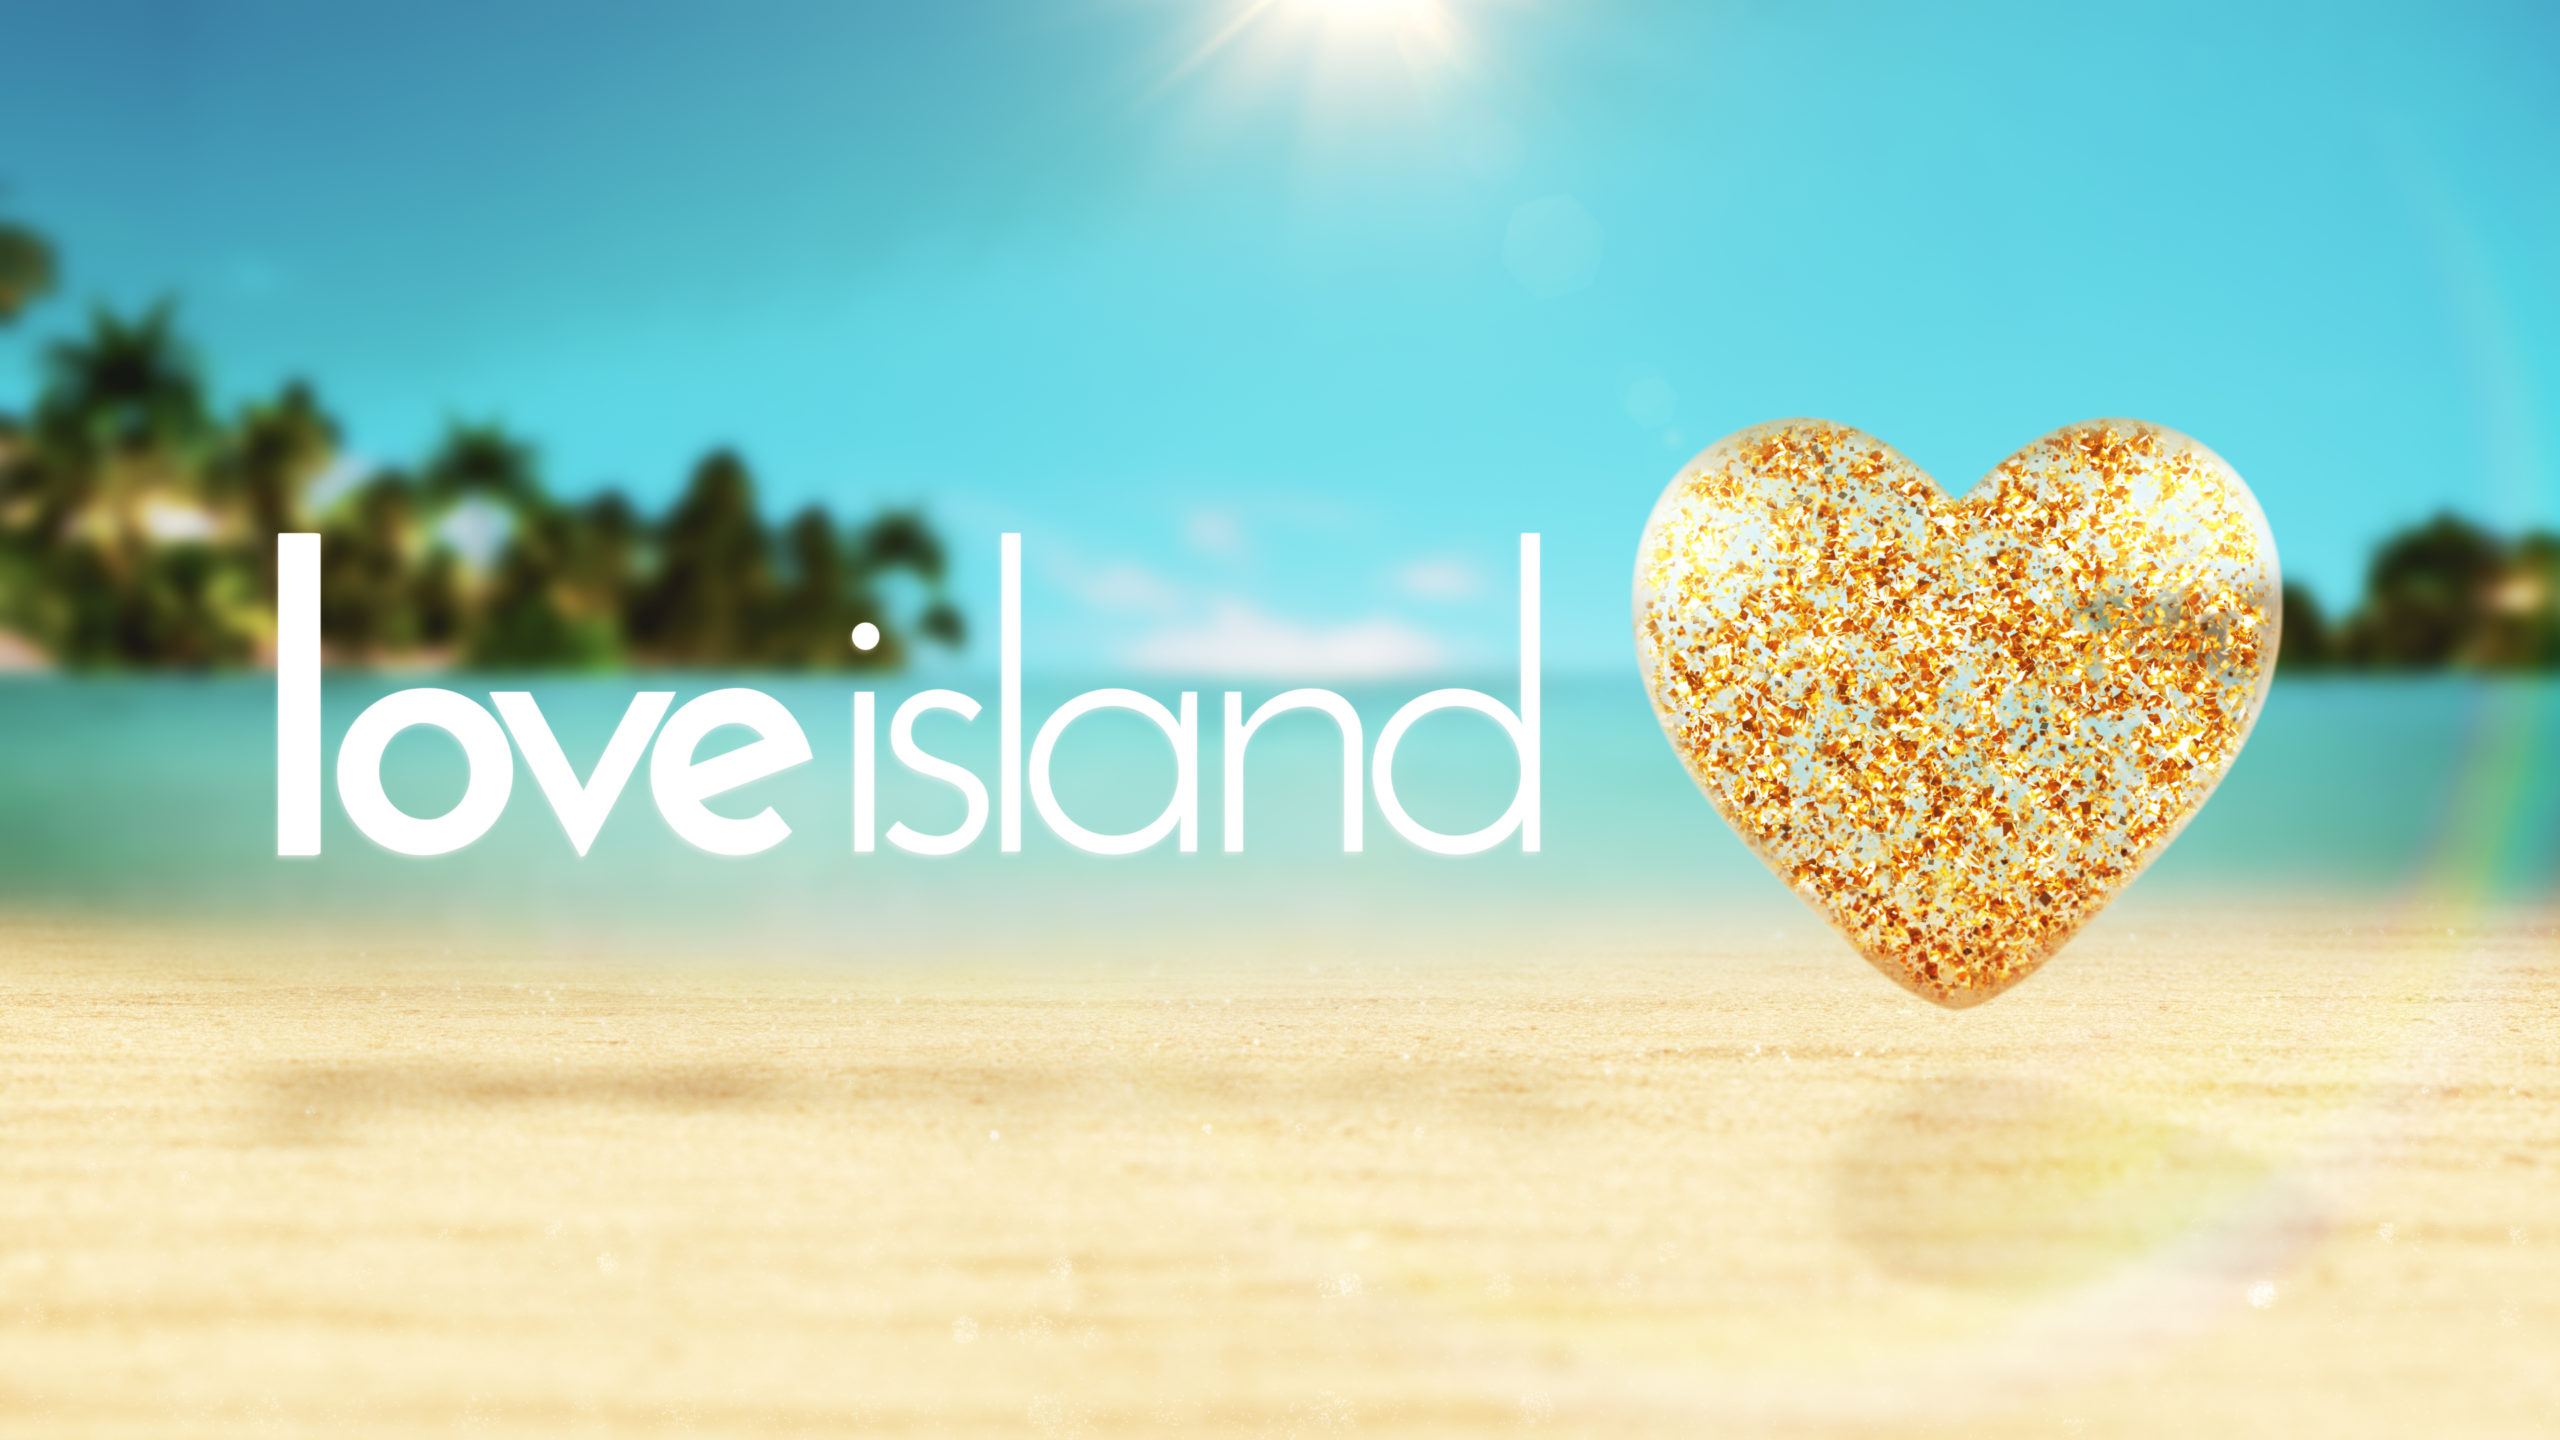 Love Island’s Faye Winter teases appearance on All Stars series Goss.ie